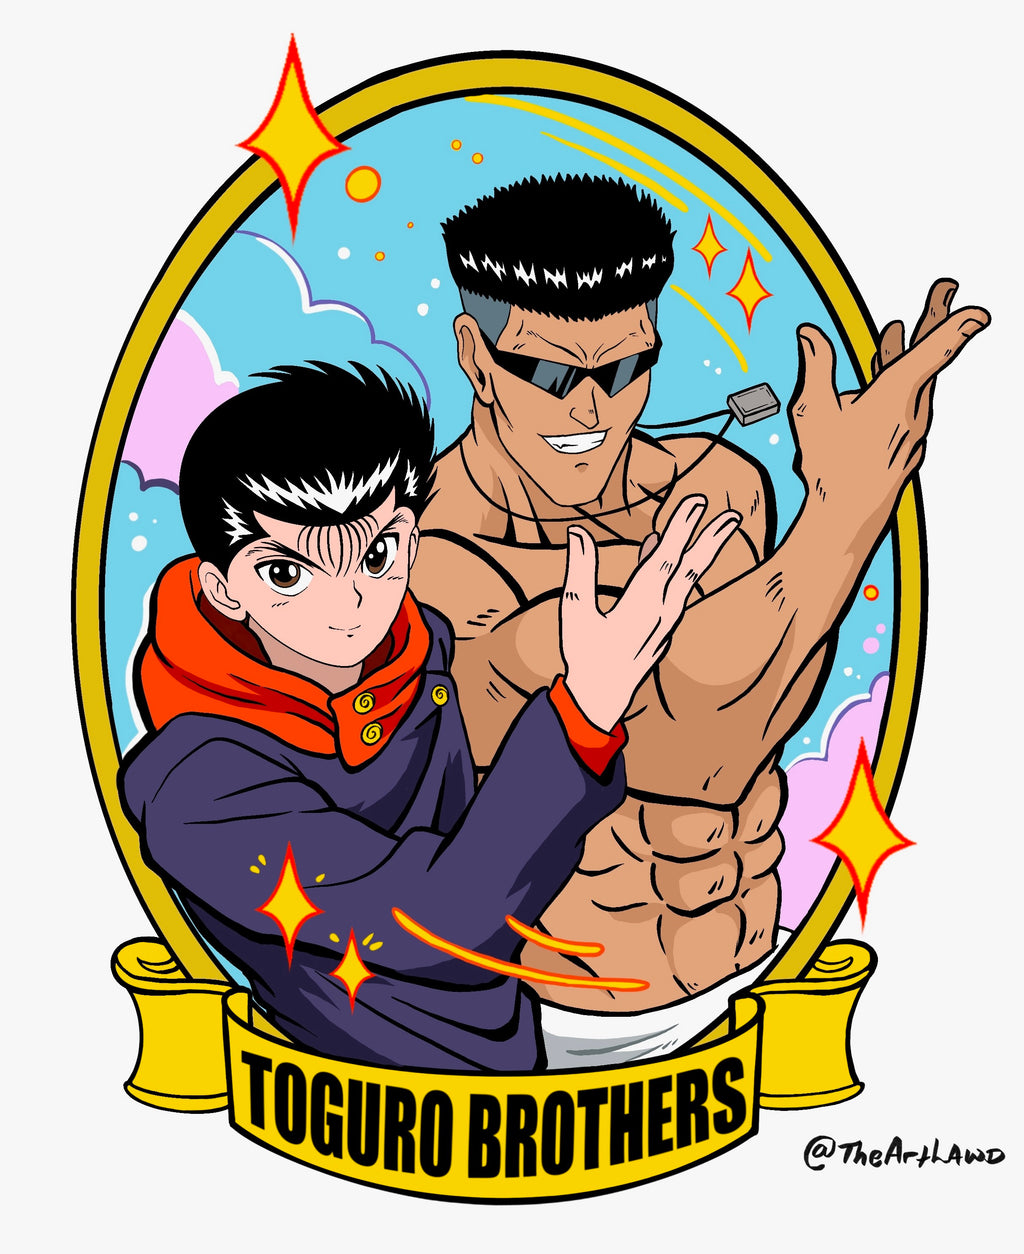 Toguro Brothers